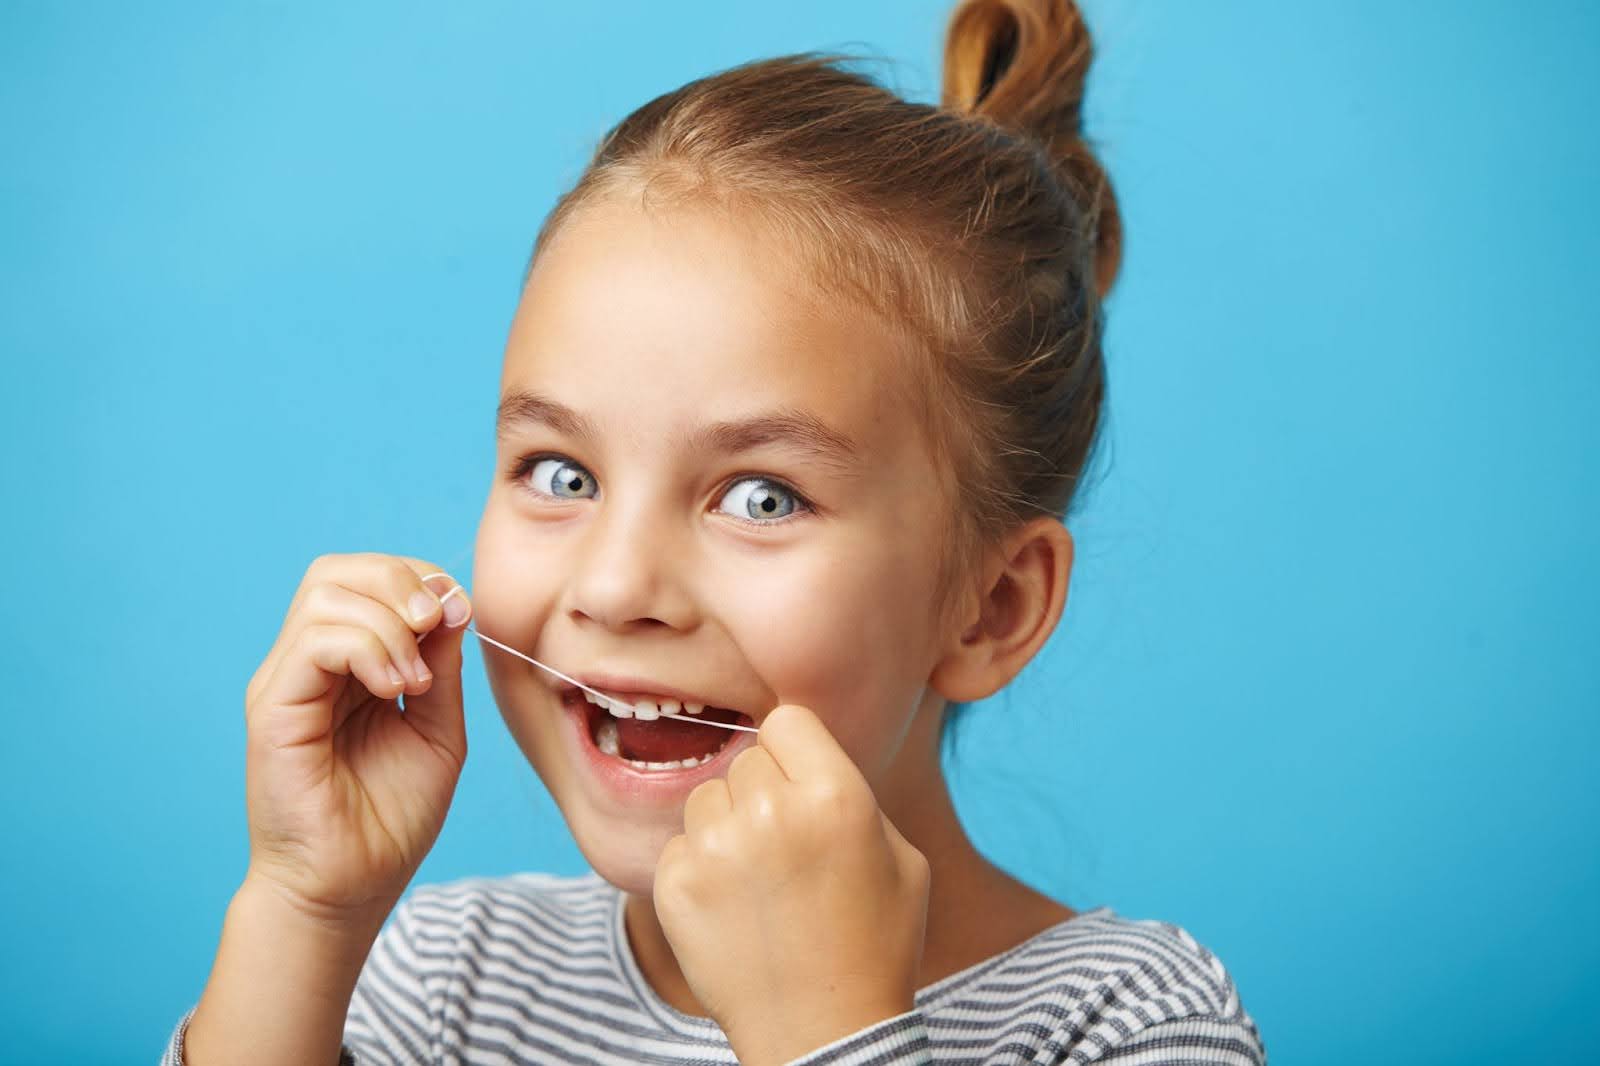 Preventing gingivitis in children by flossing